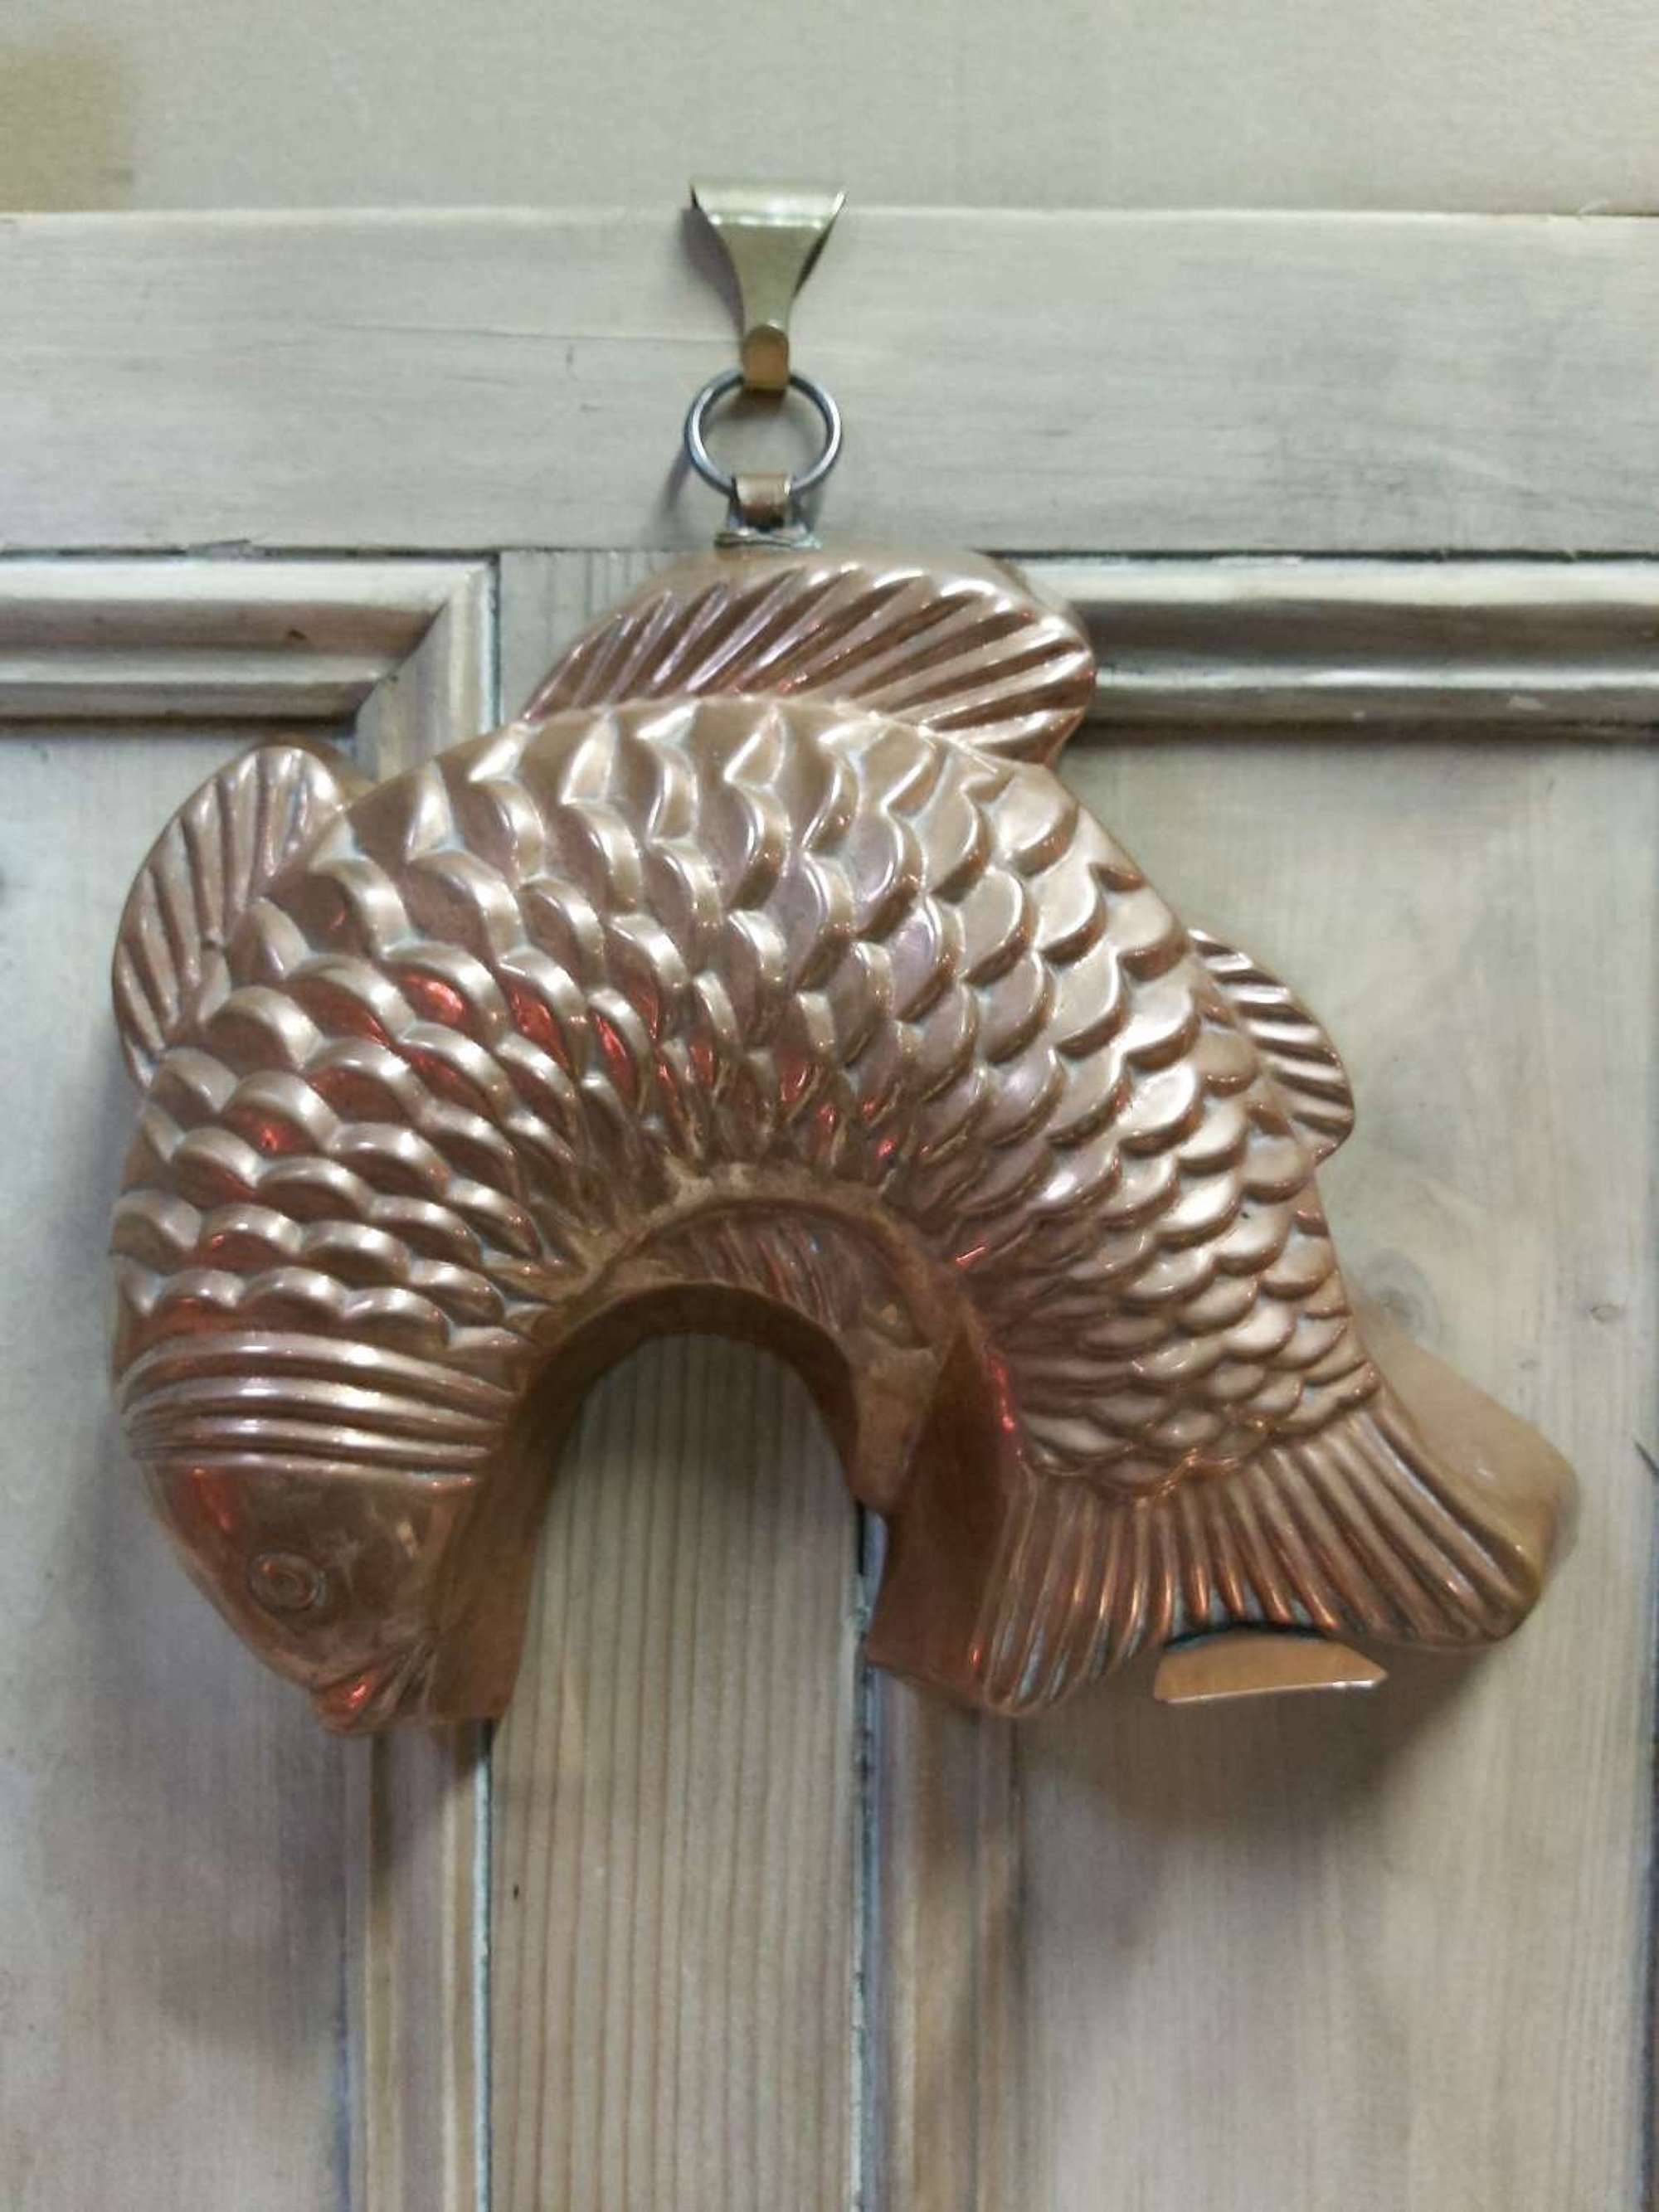 Late 19th century copper fish mould